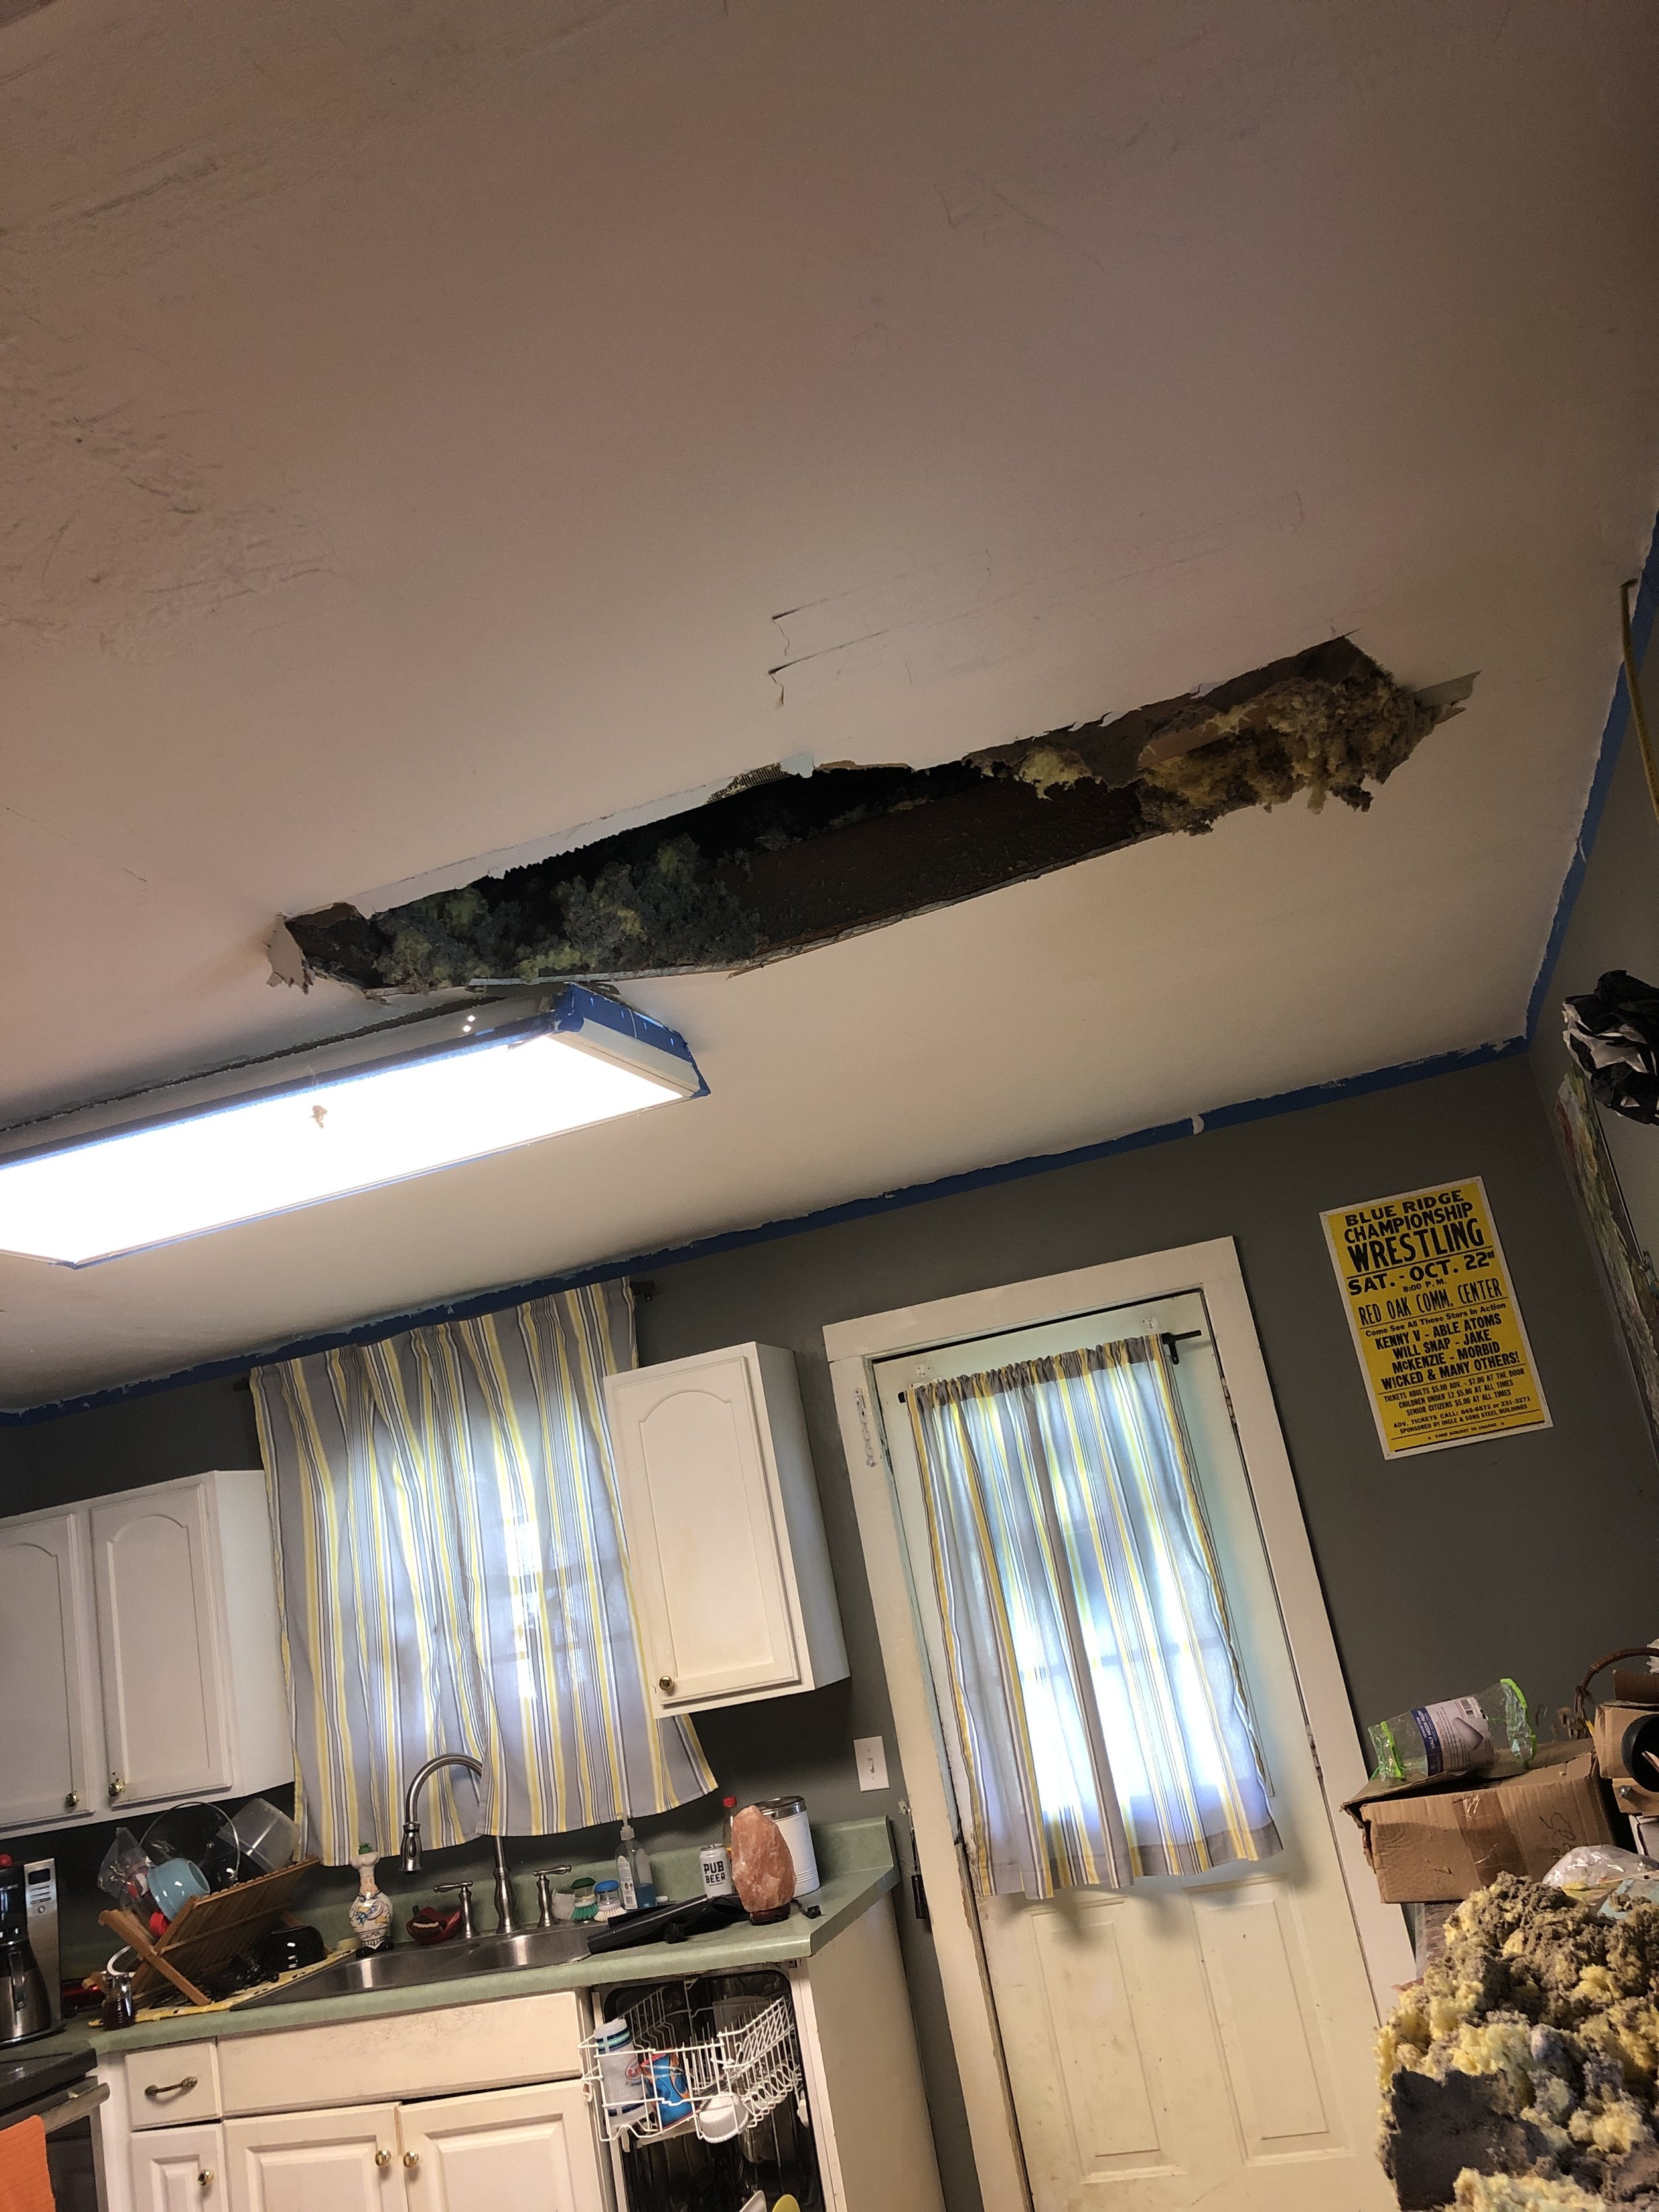 So a guy fell through the ceiling...